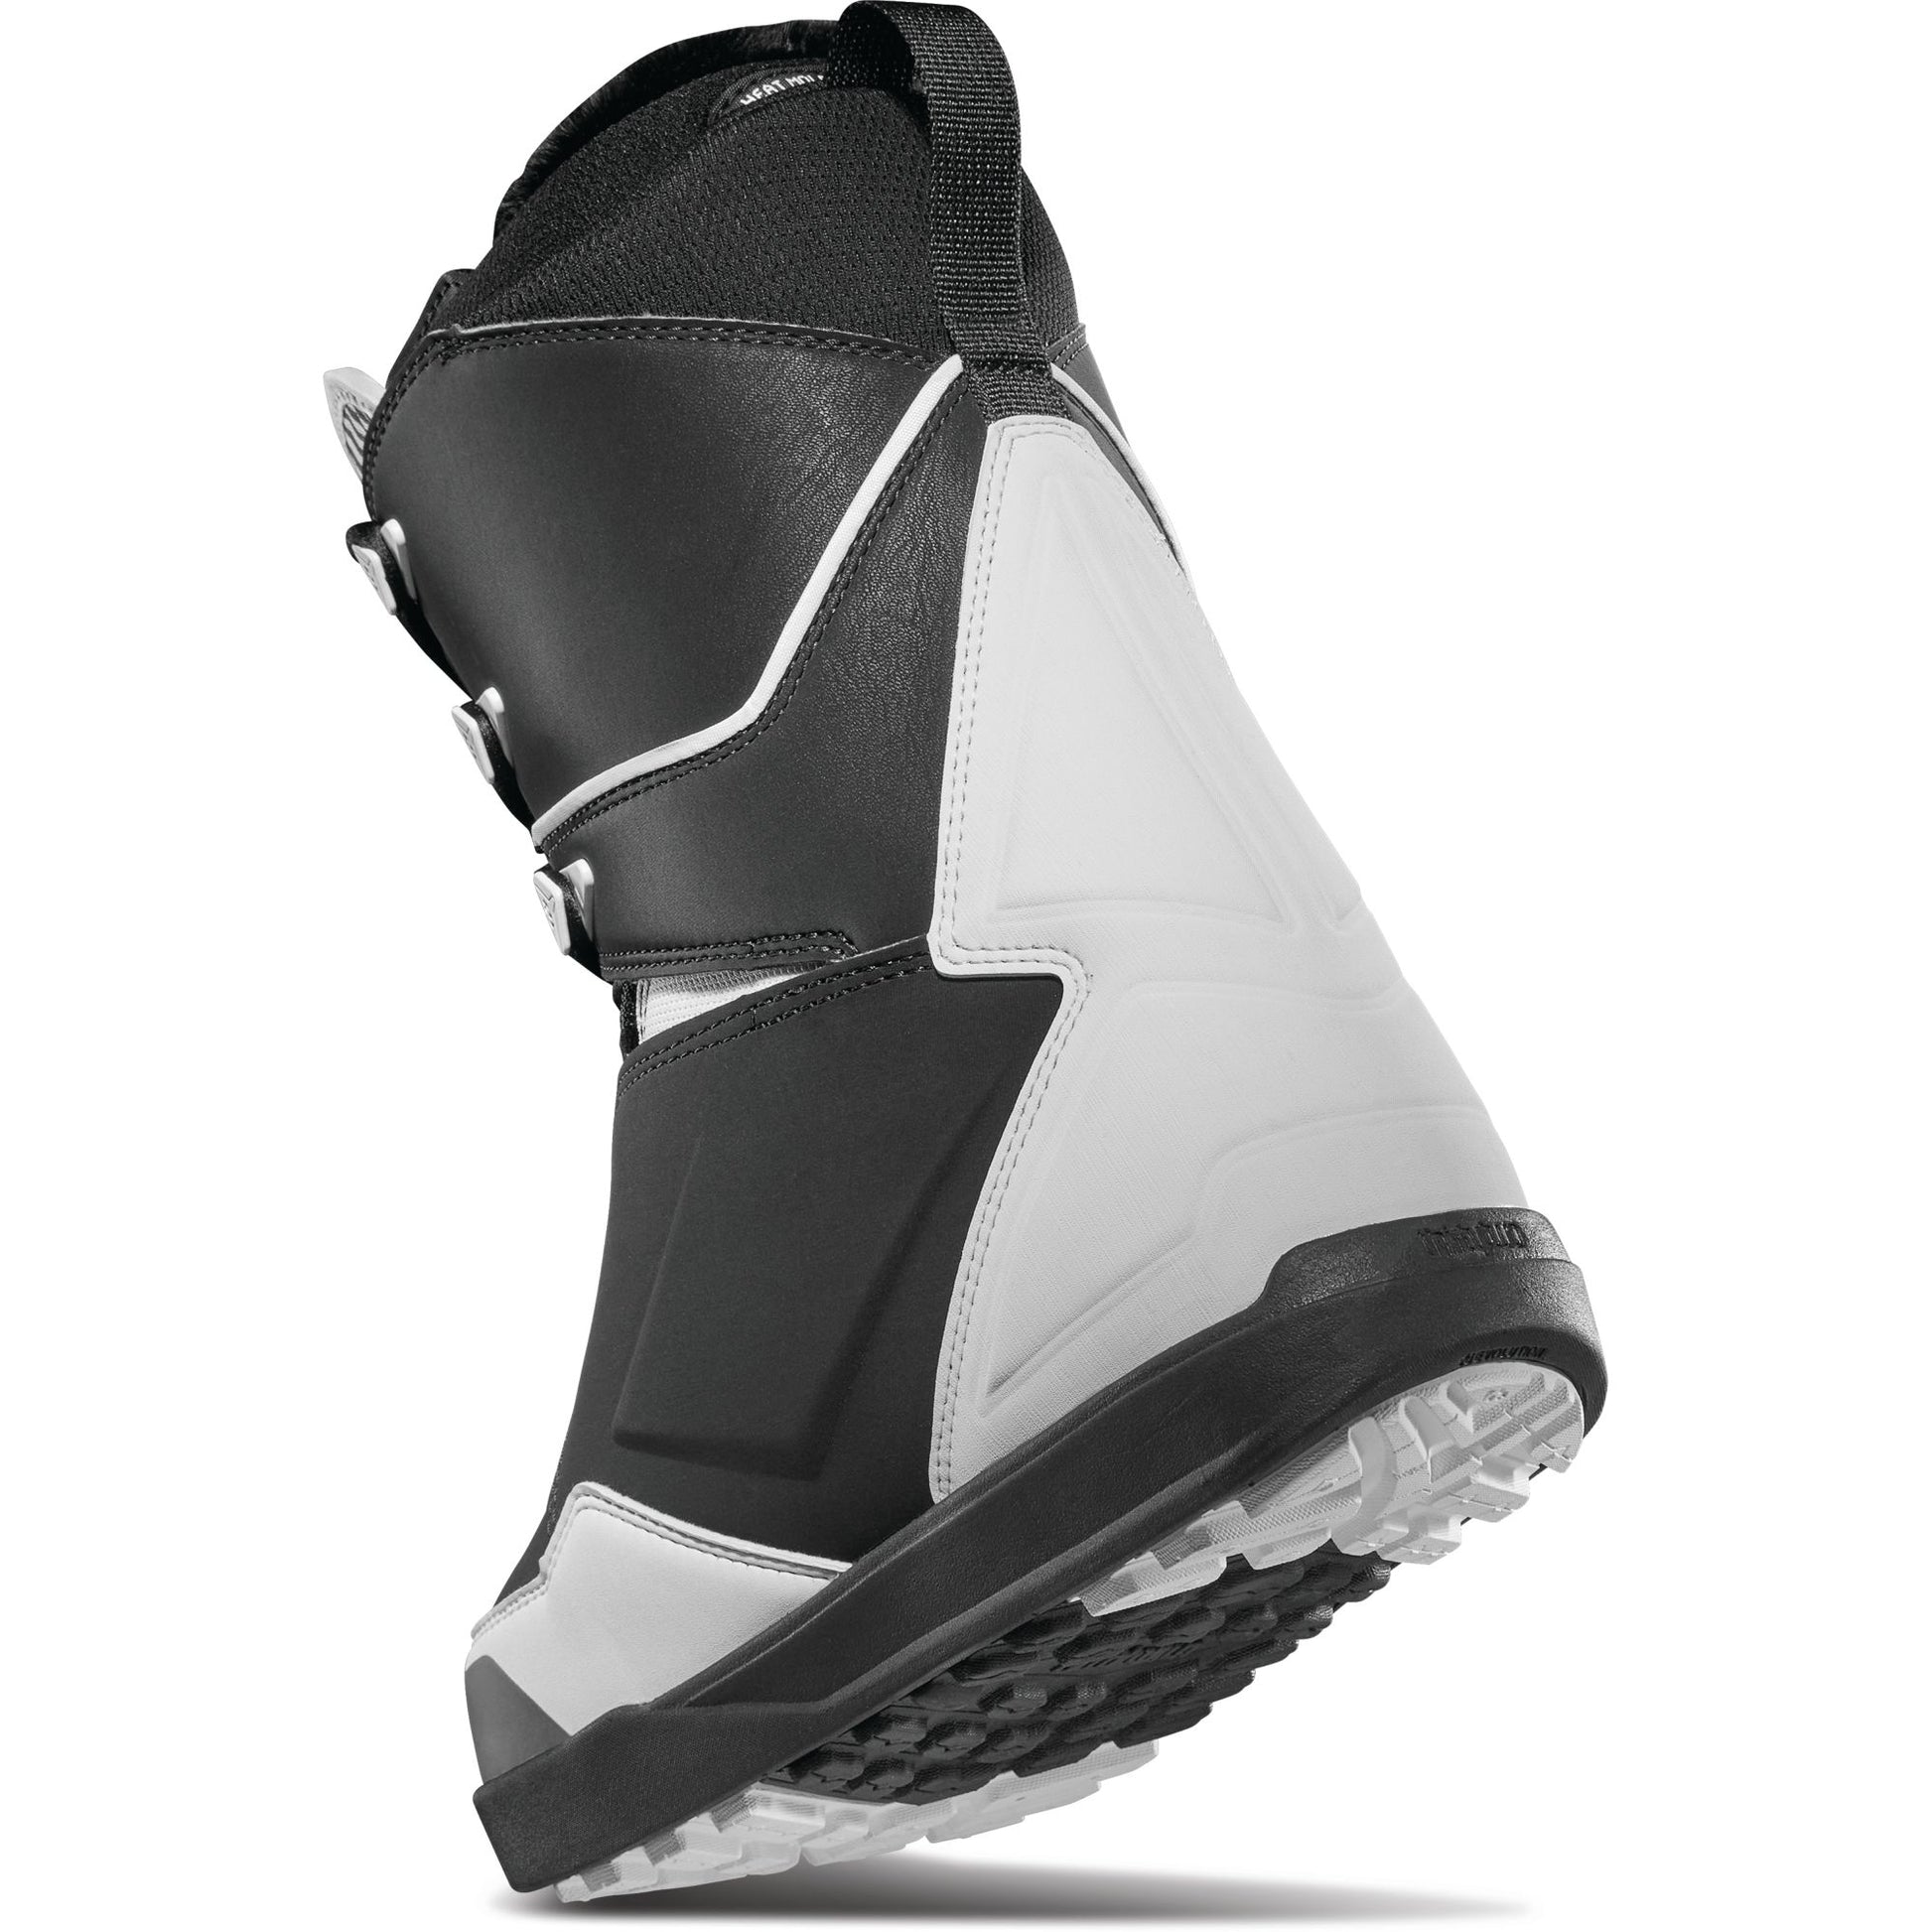 ThirtyTwo Women's Lashed Melancon Snowboard Boots Black White Snowboard Boots